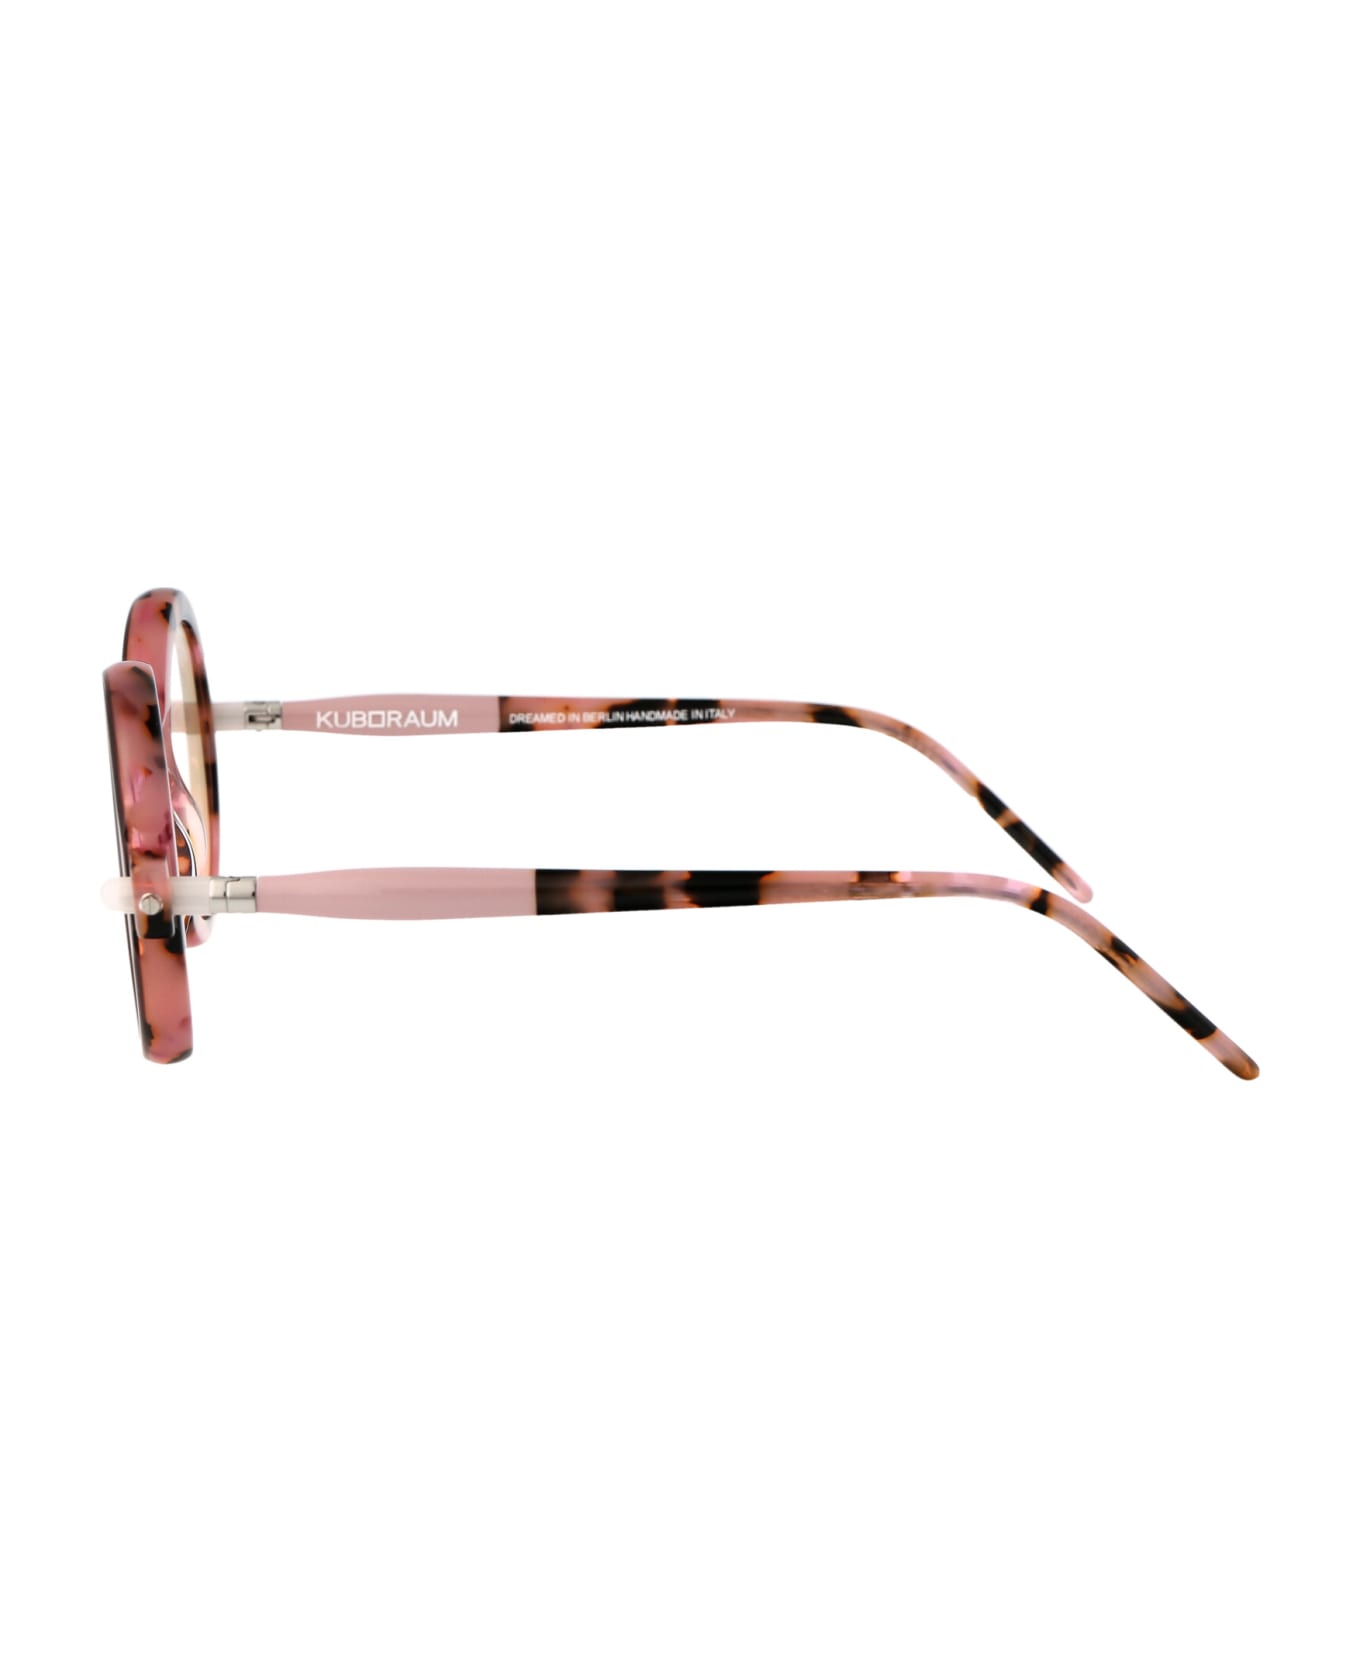 Kuboraum Maske P1 Sunglasses - HP pink1*